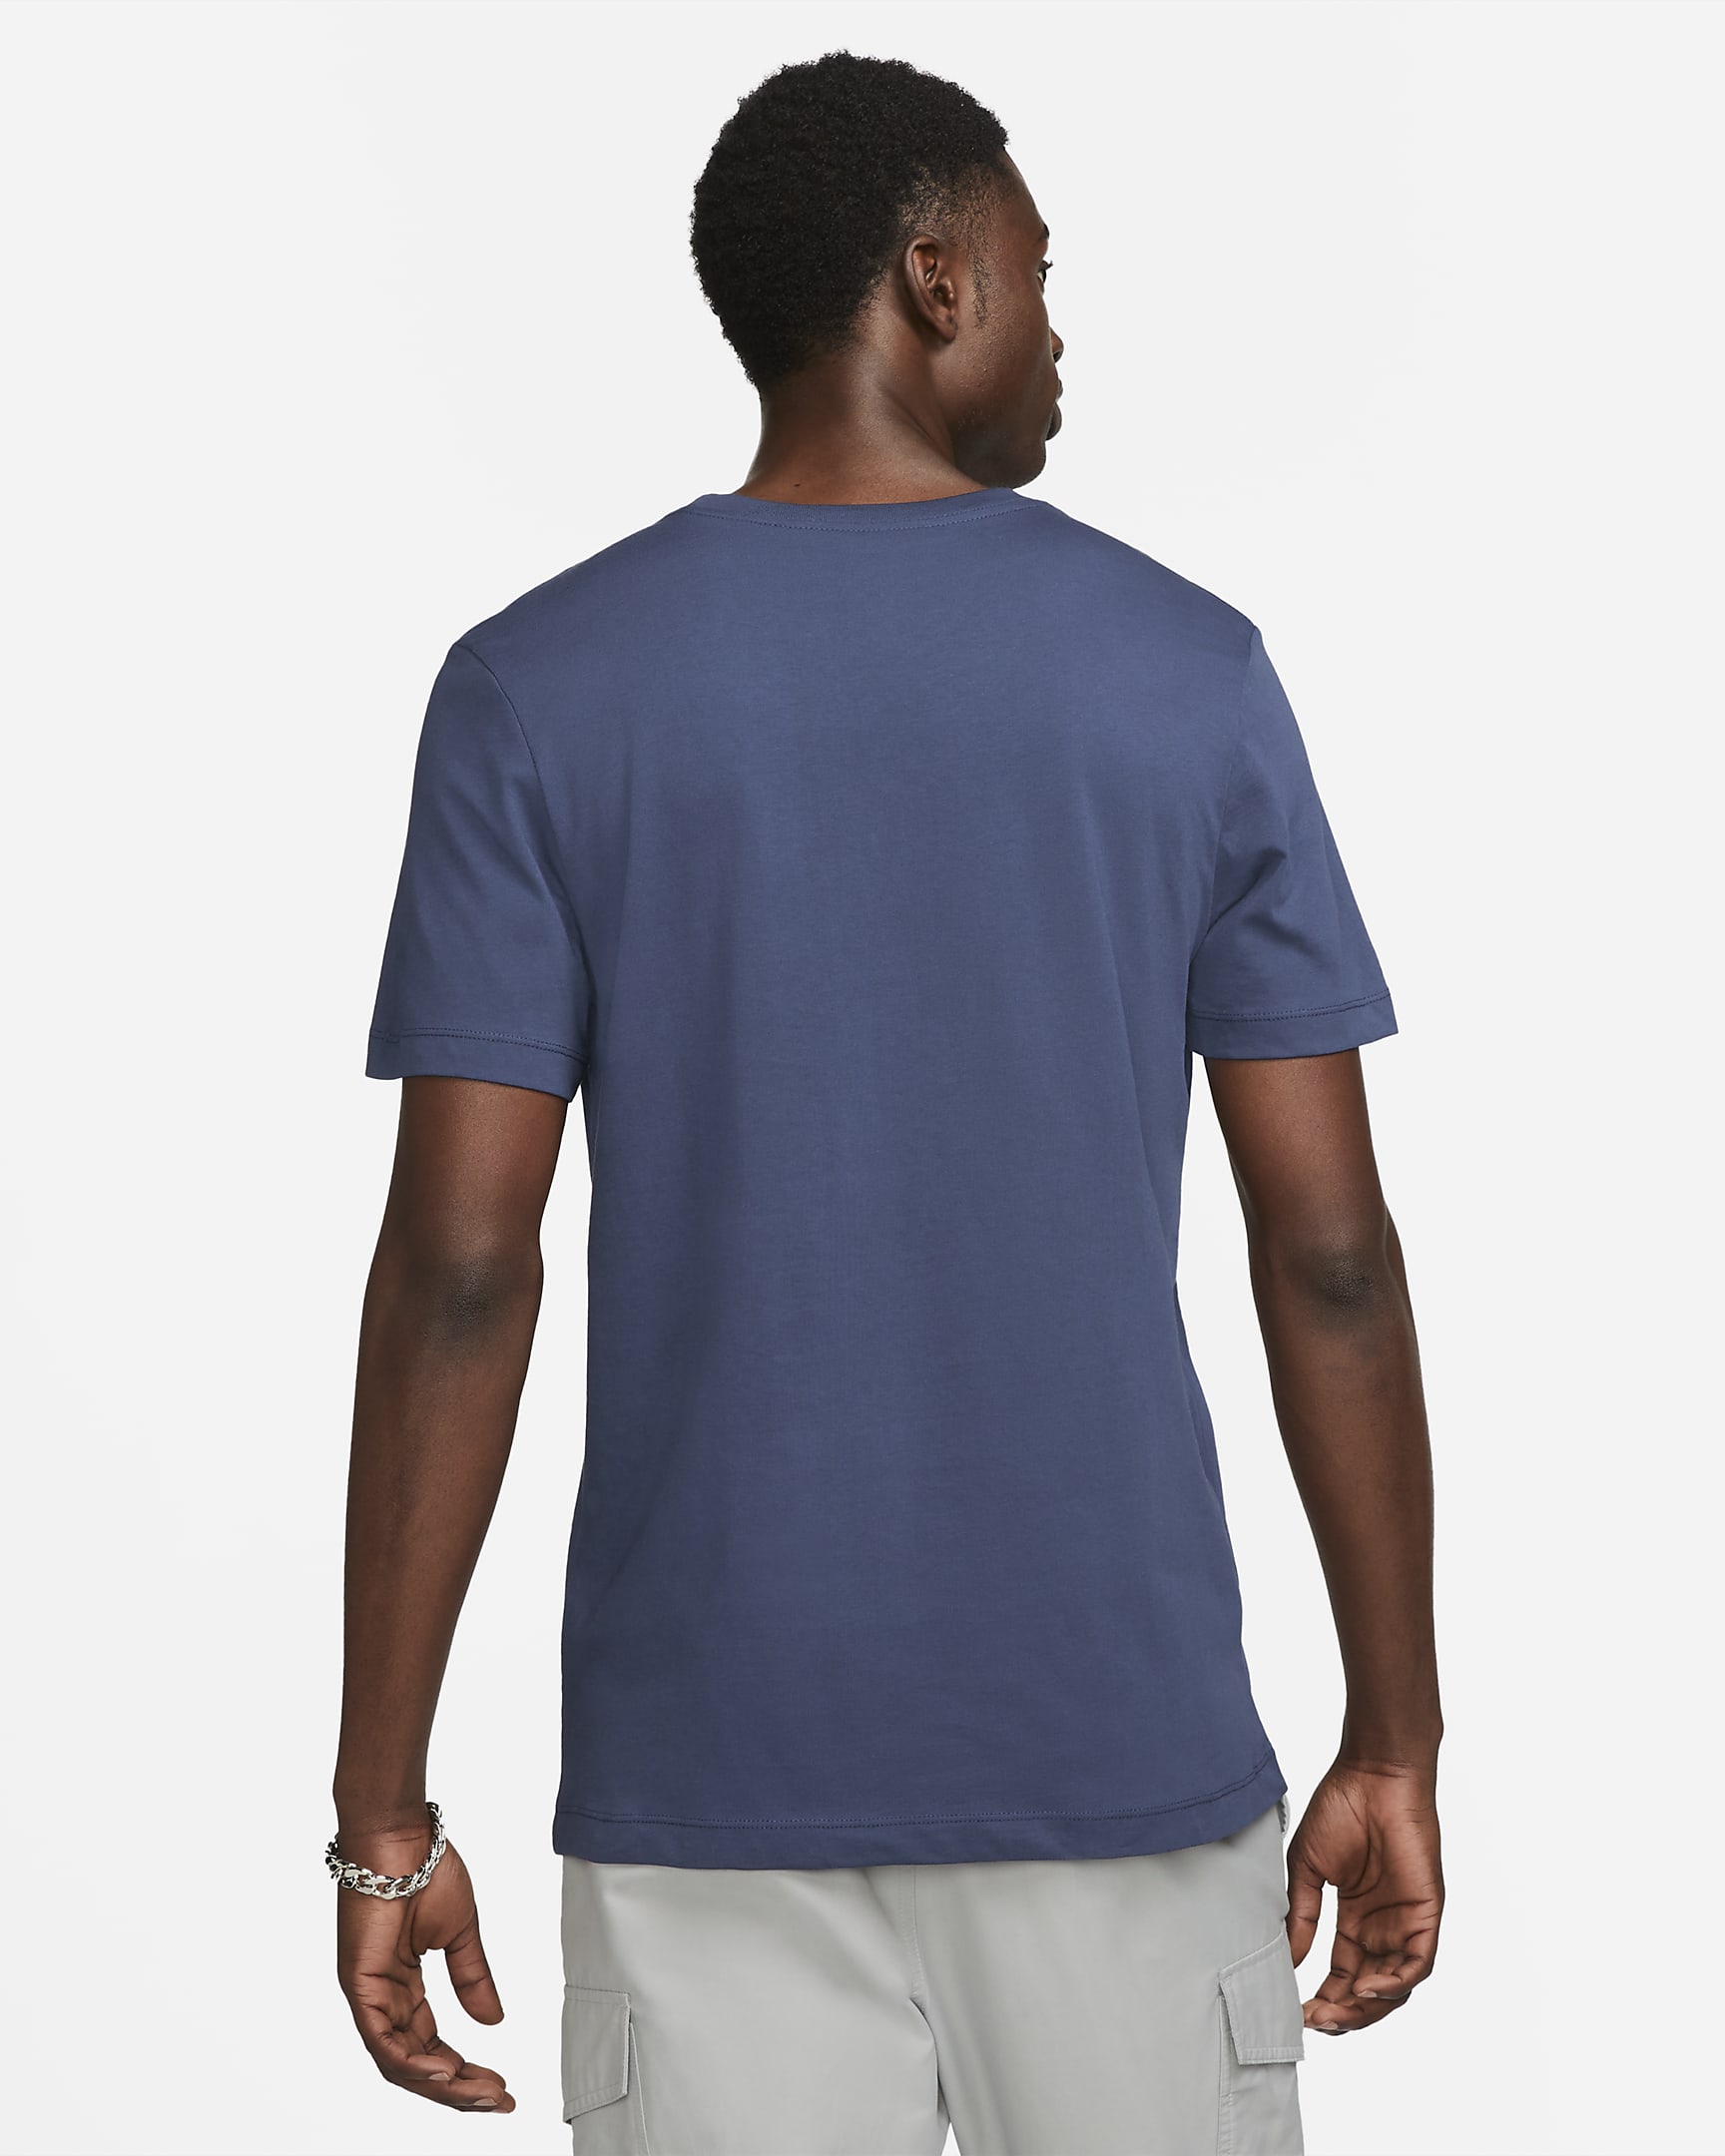 Paris Saint-Germain Men's Nike T-Shirt. Nike UK